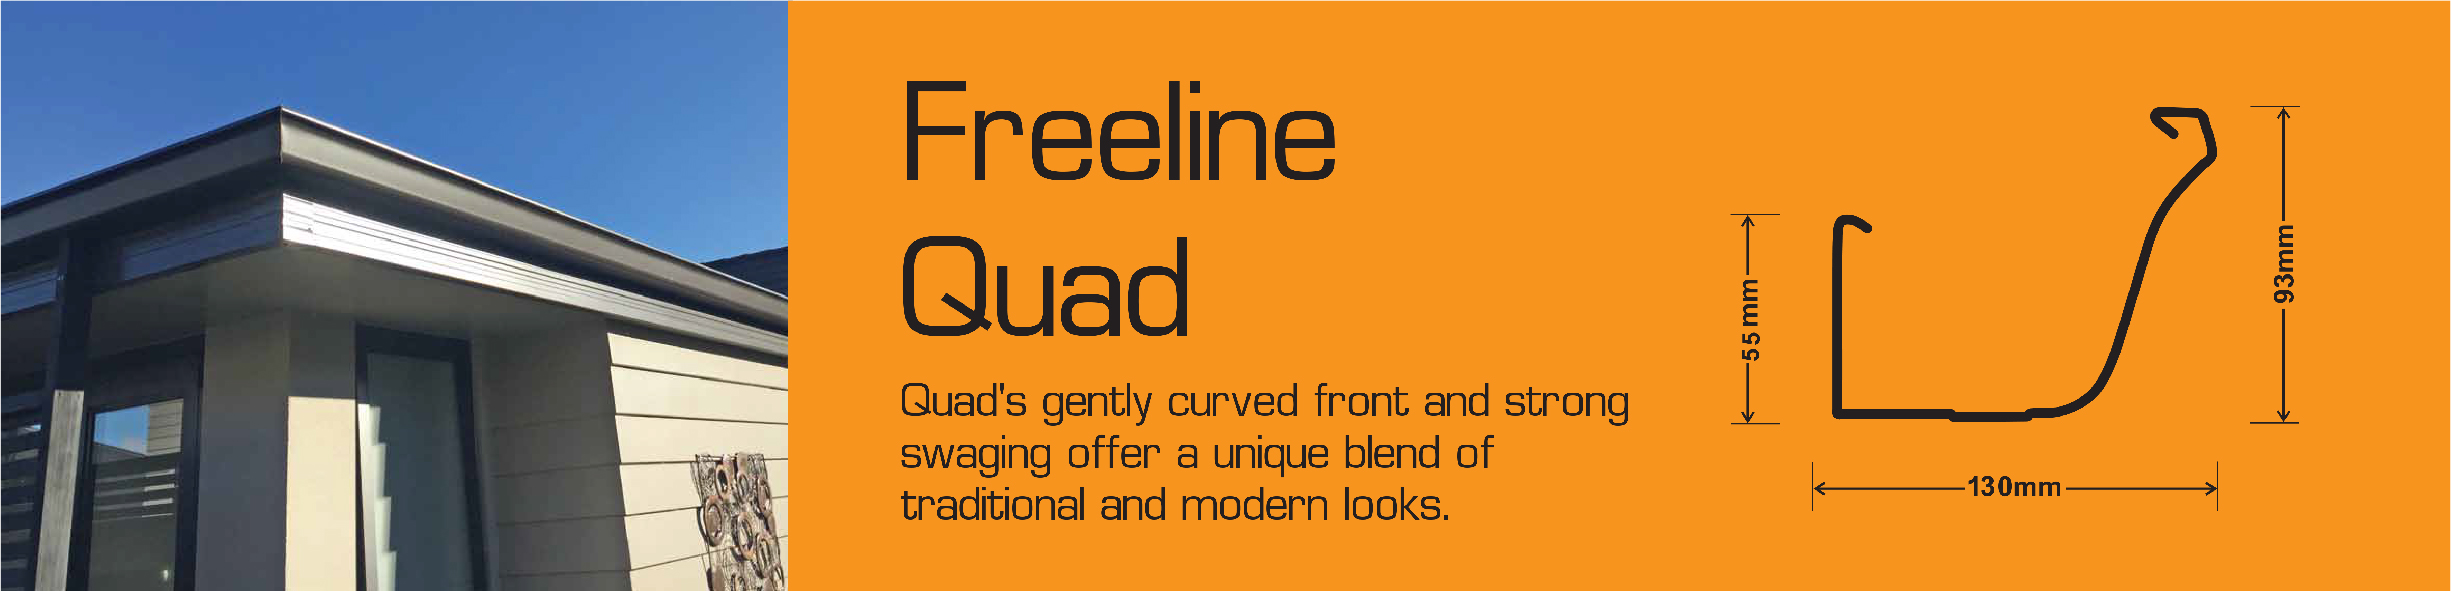 Freeline-Quad.jpg